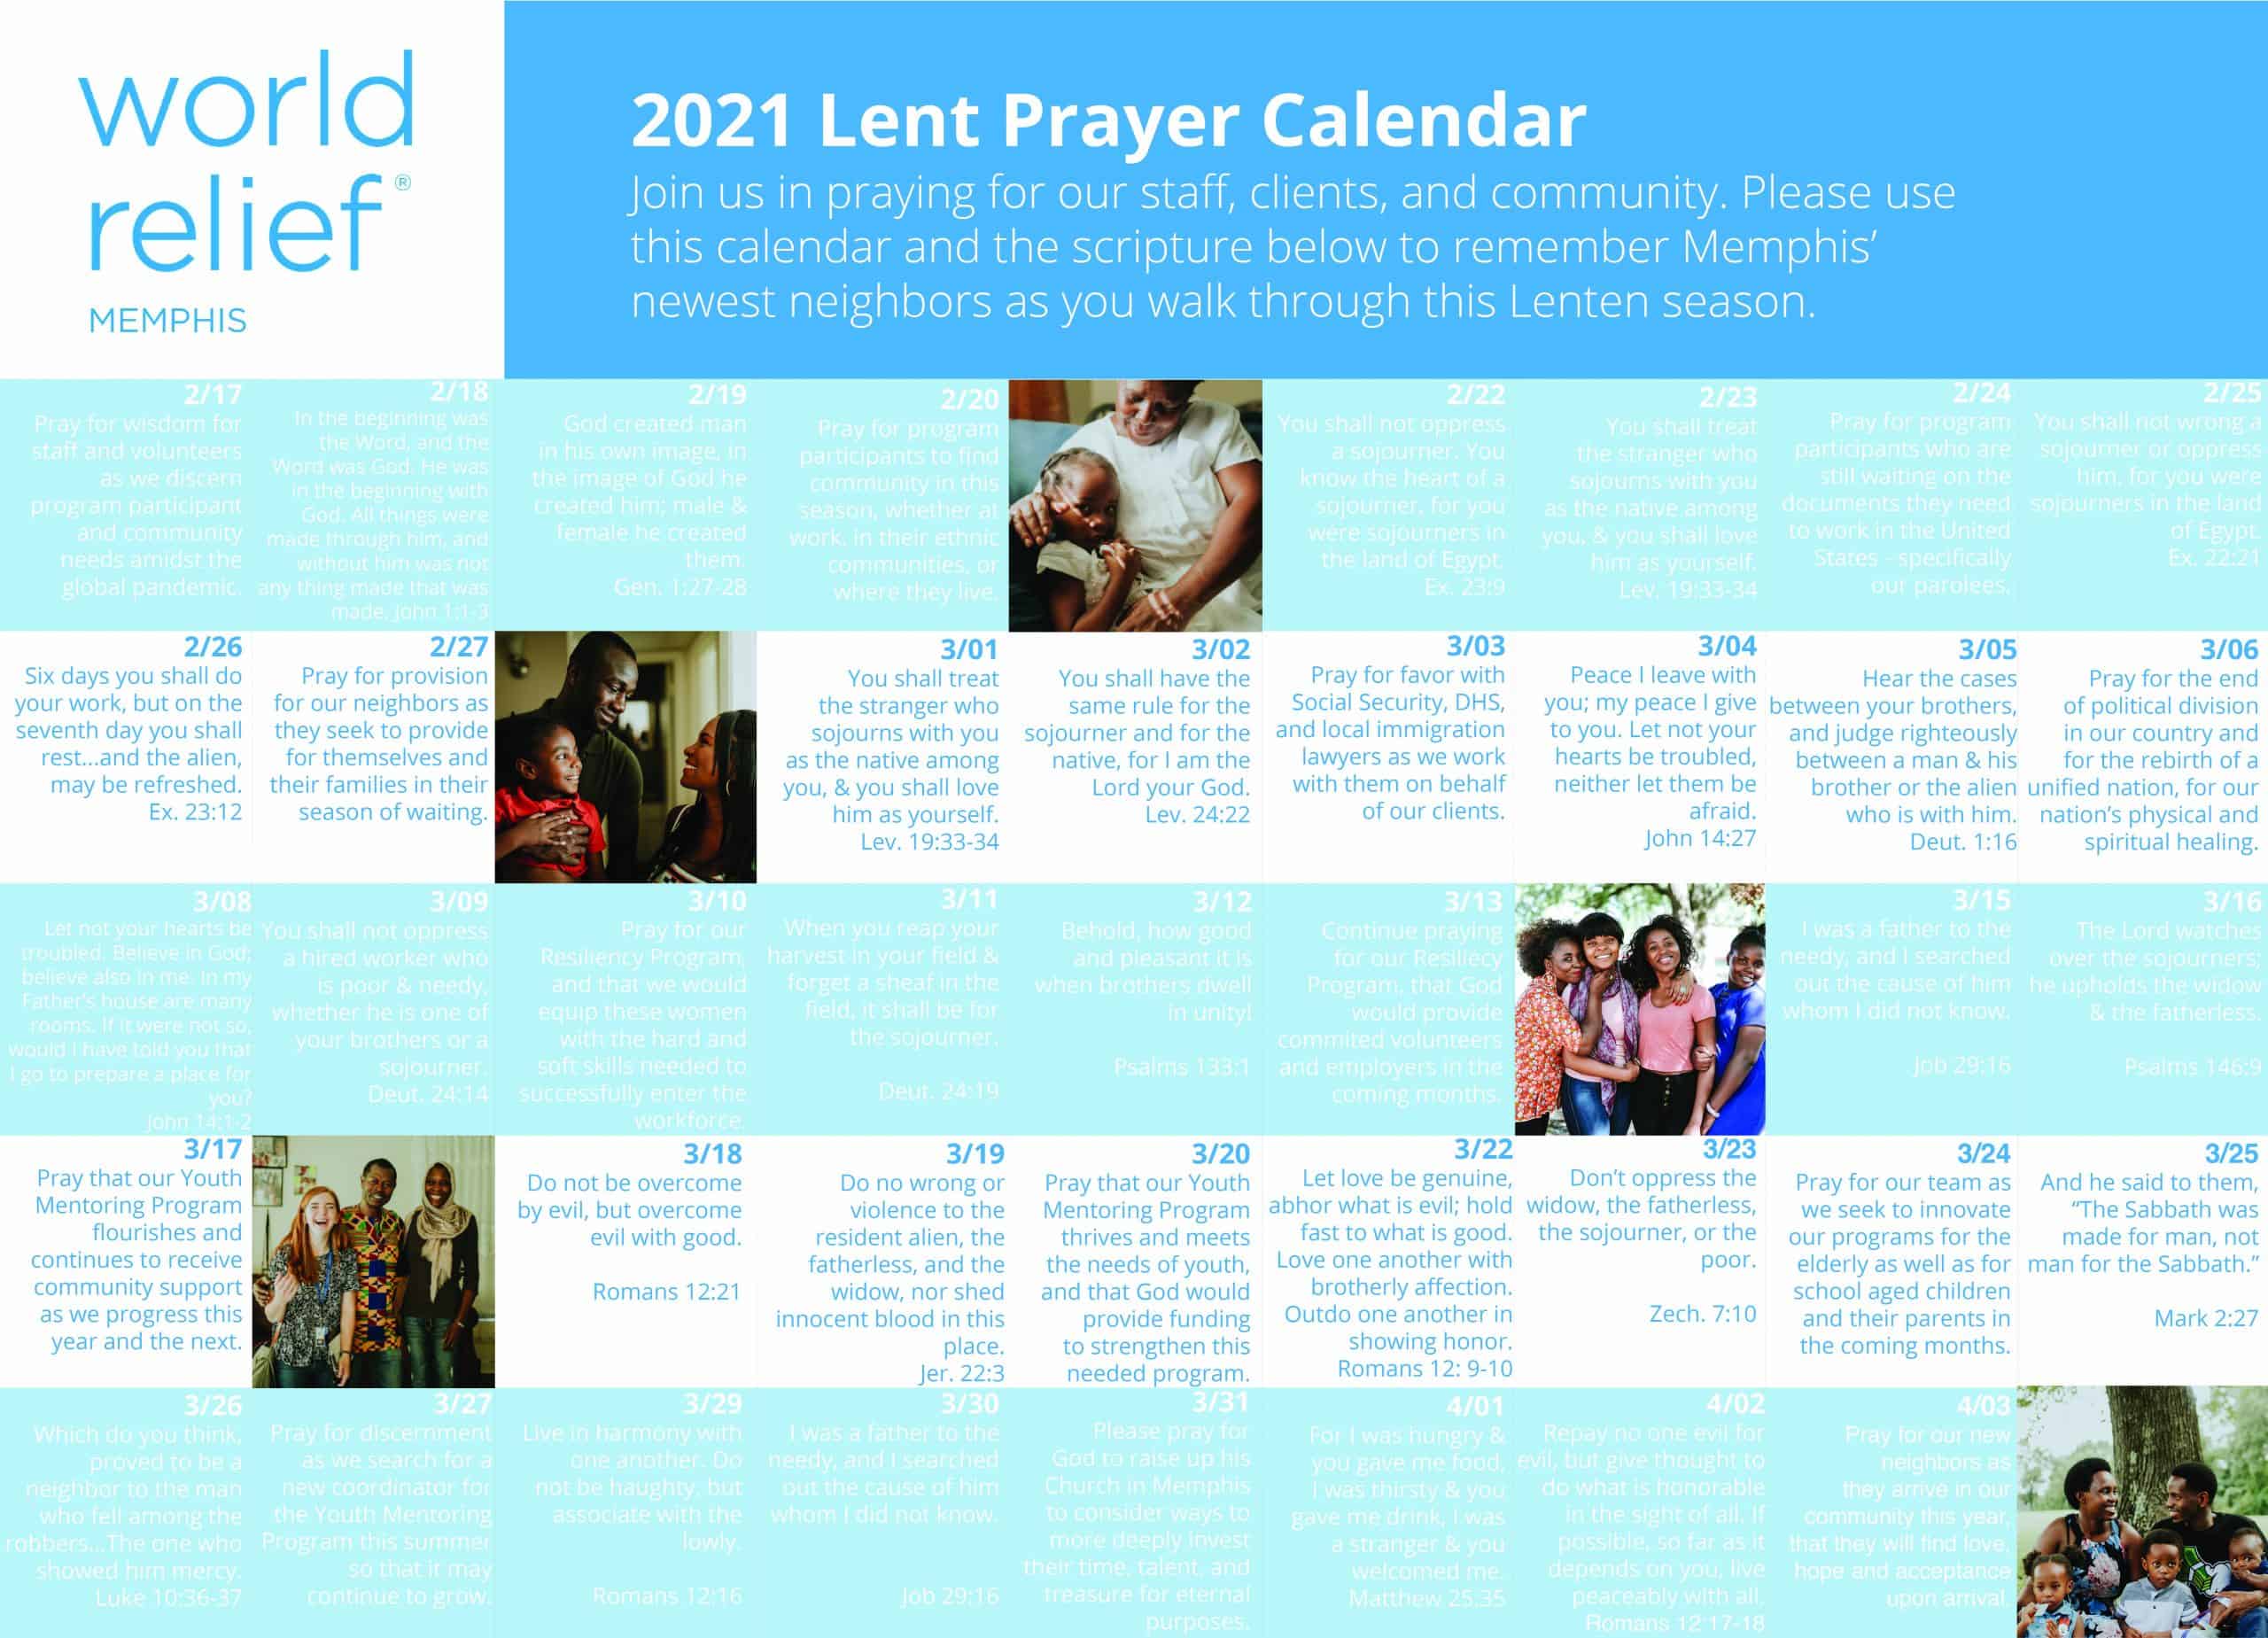 Prayer requests in calendar format